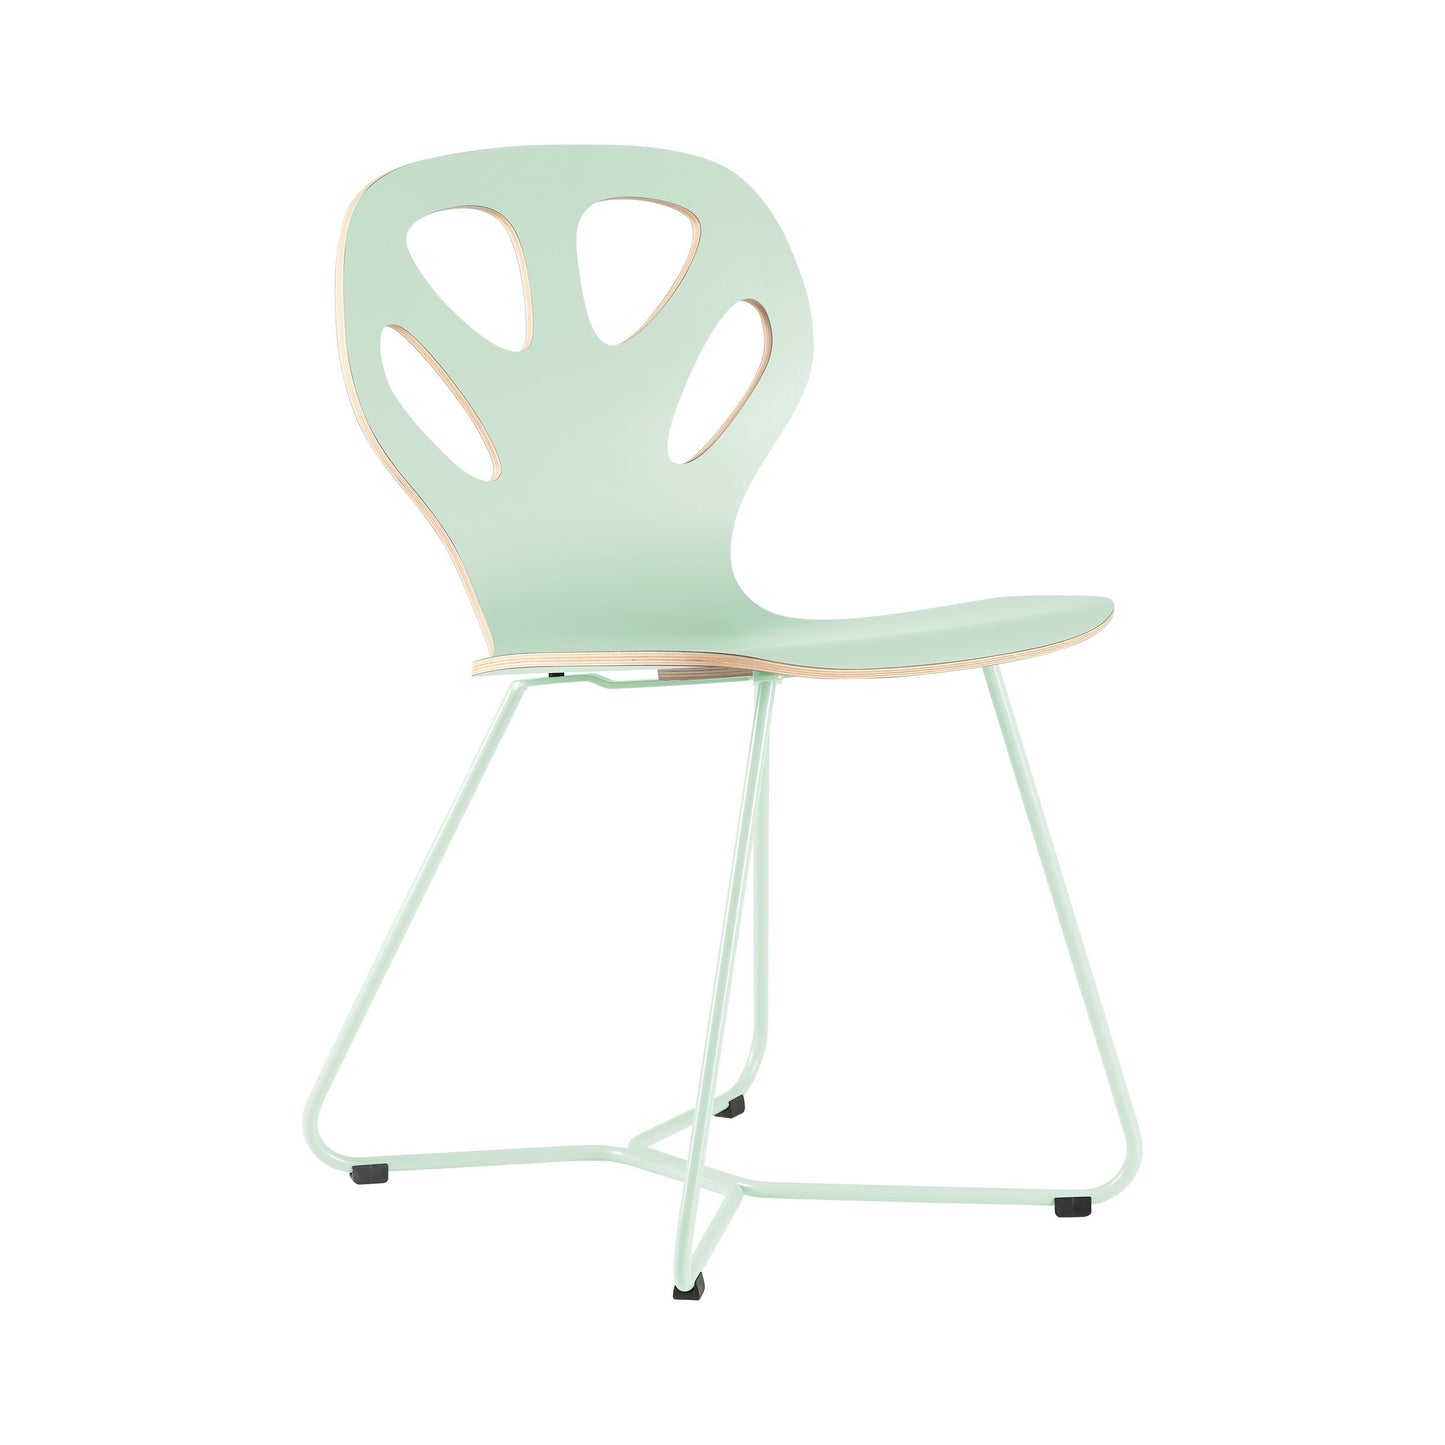 Chair Maple M02 - Mint